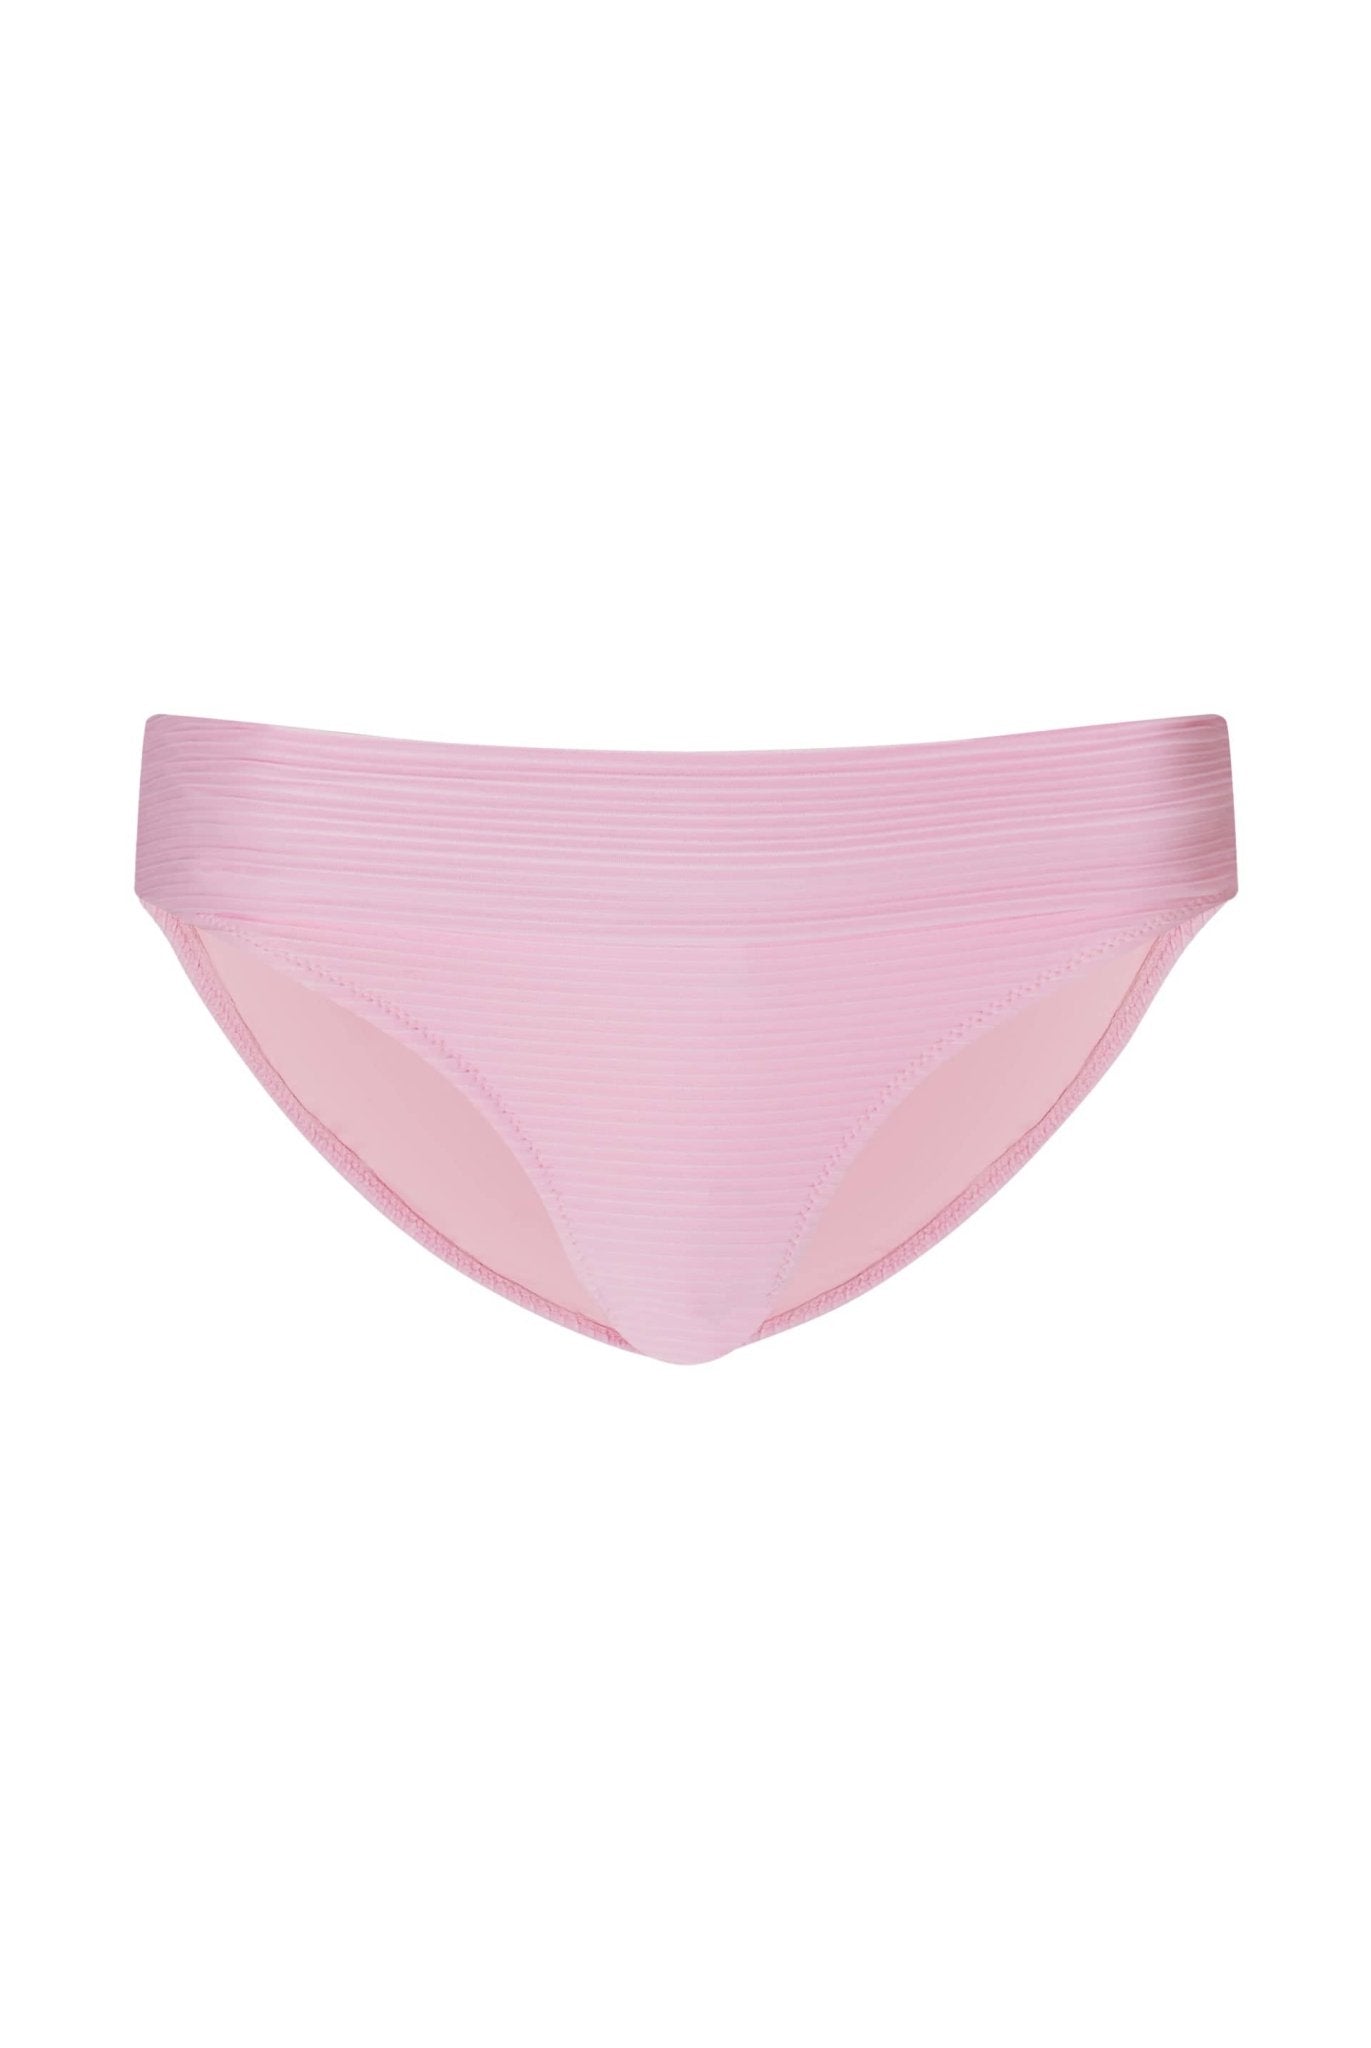 Sicily Fold Over Bikini Bottom - Heidi Klein - UK Store